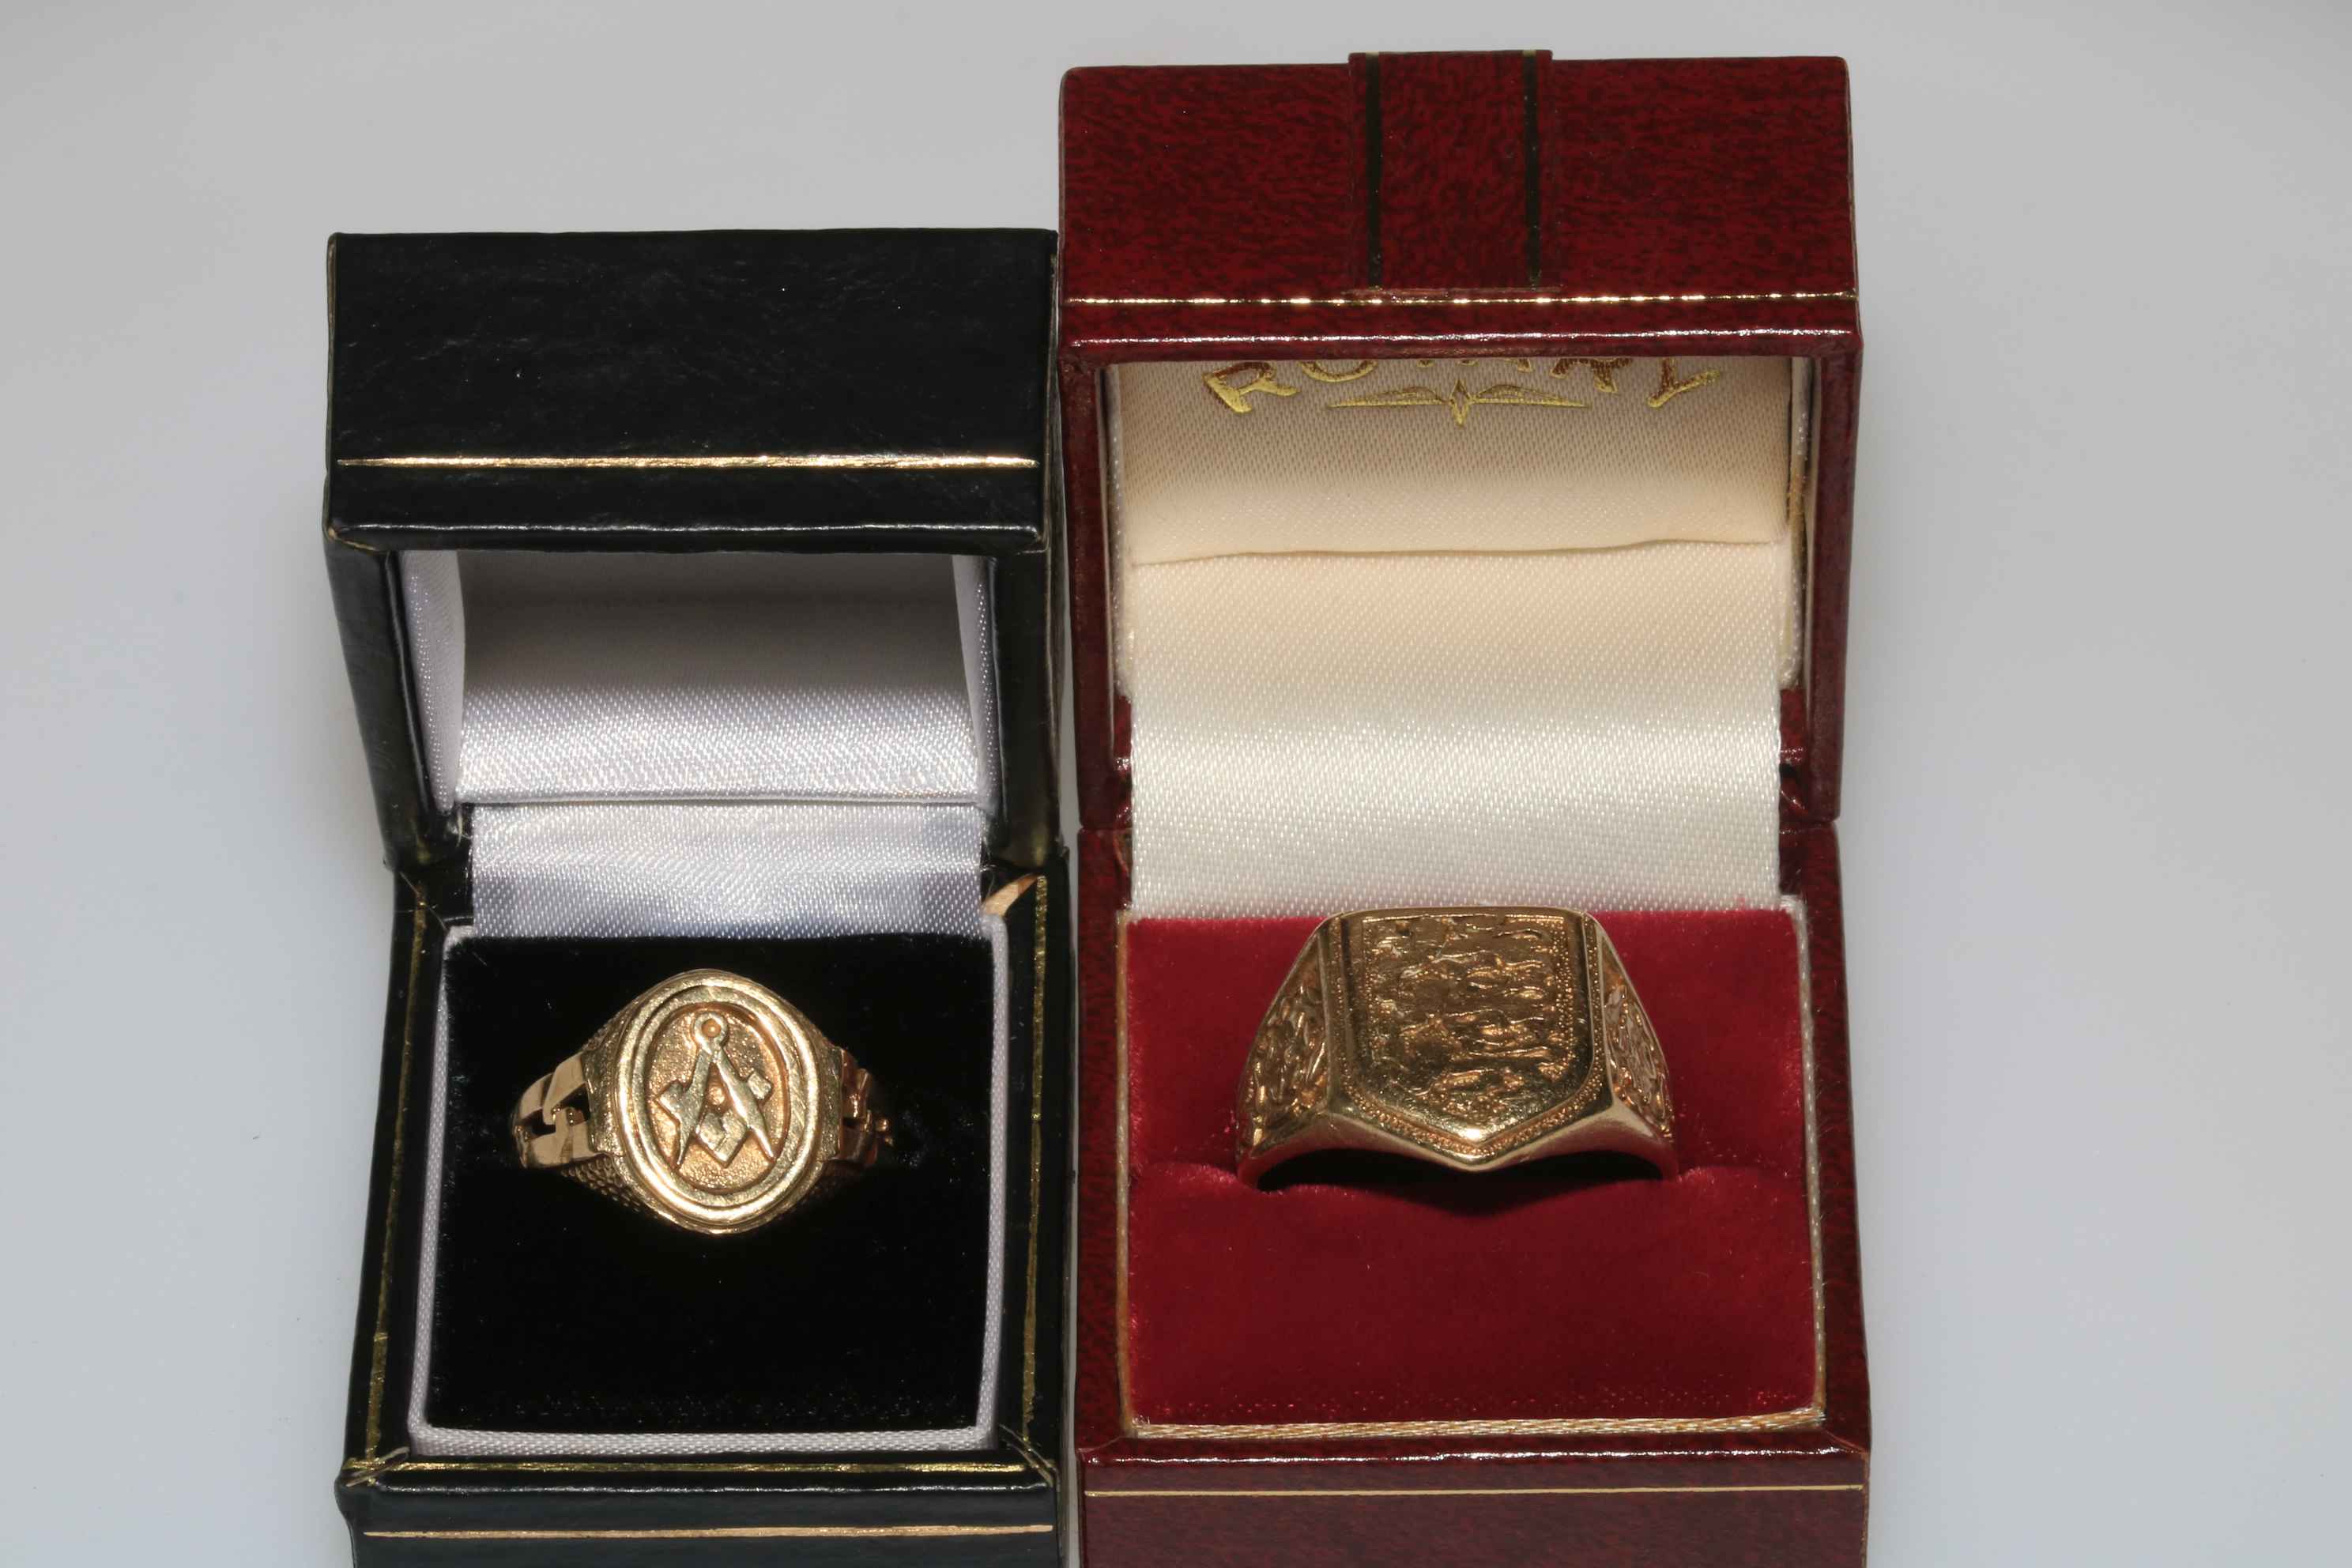 Gents 9 carat gold shield design ring, size Z and 9 carat Masonic ring, size U, both boxed.